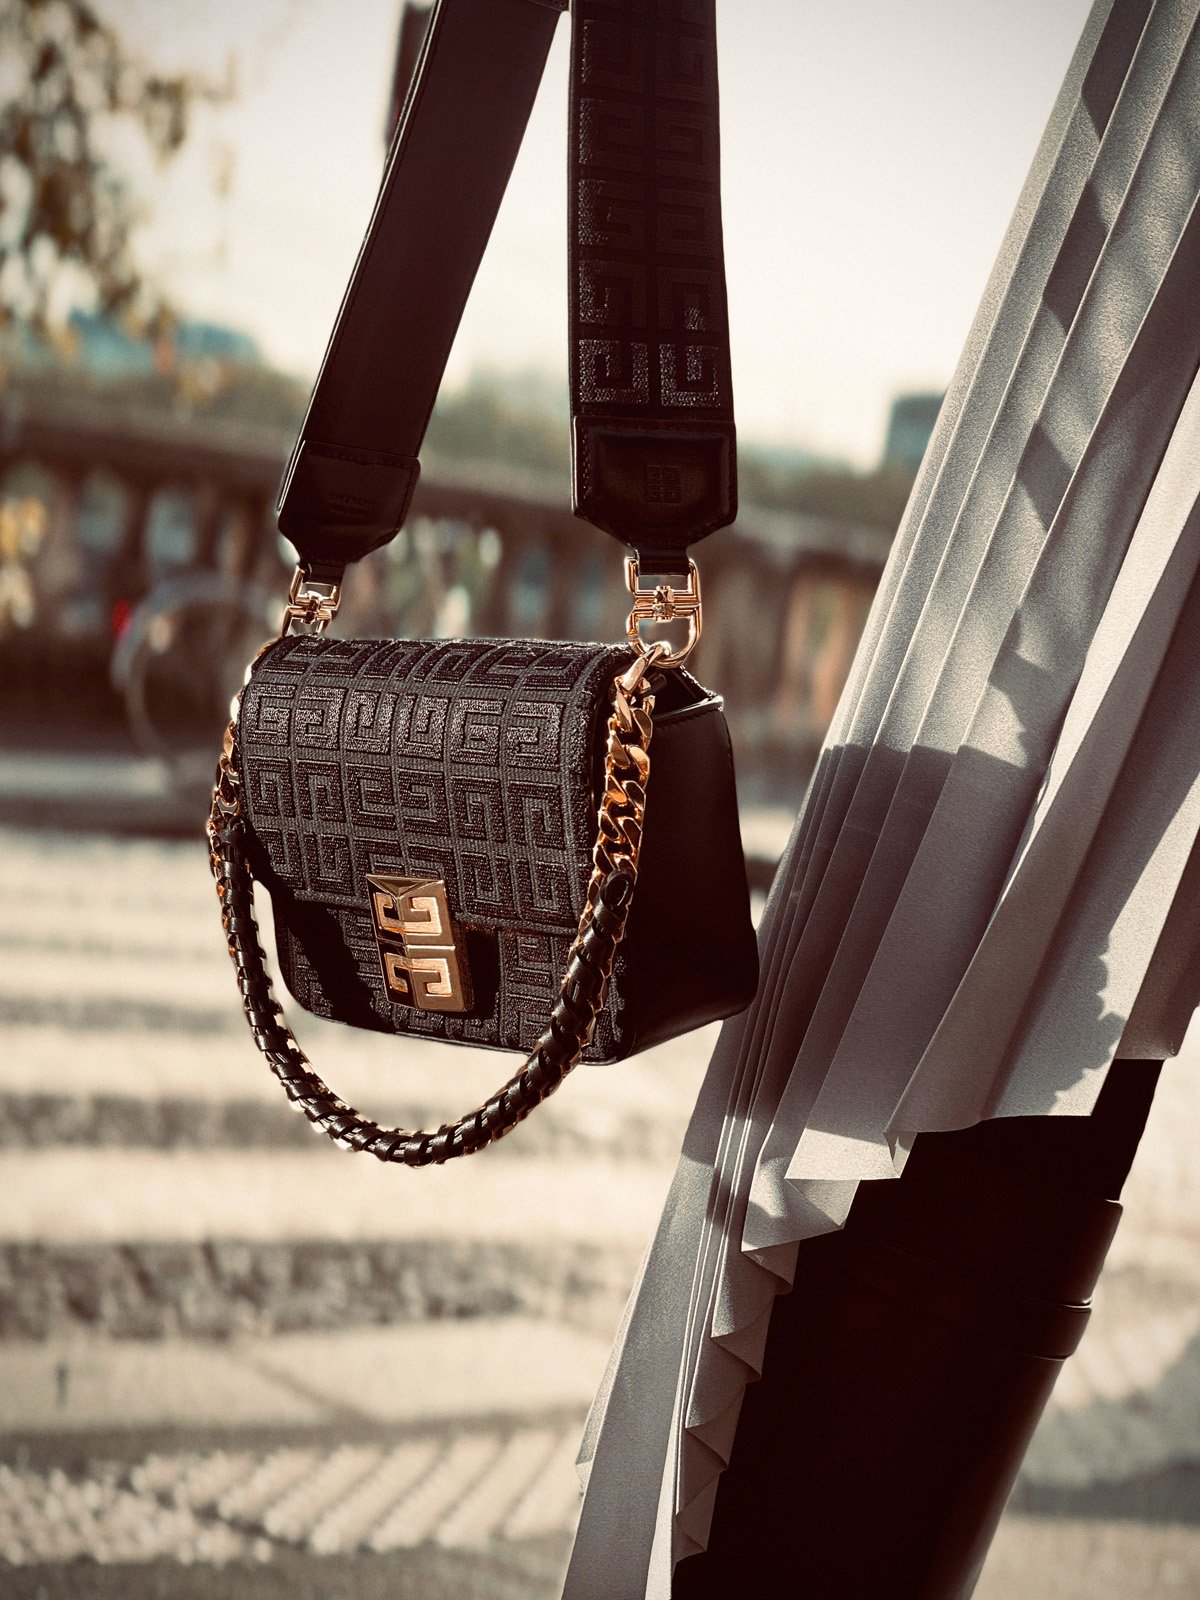 Givenchy Medium 4G Chain Leather Shoulder Bag